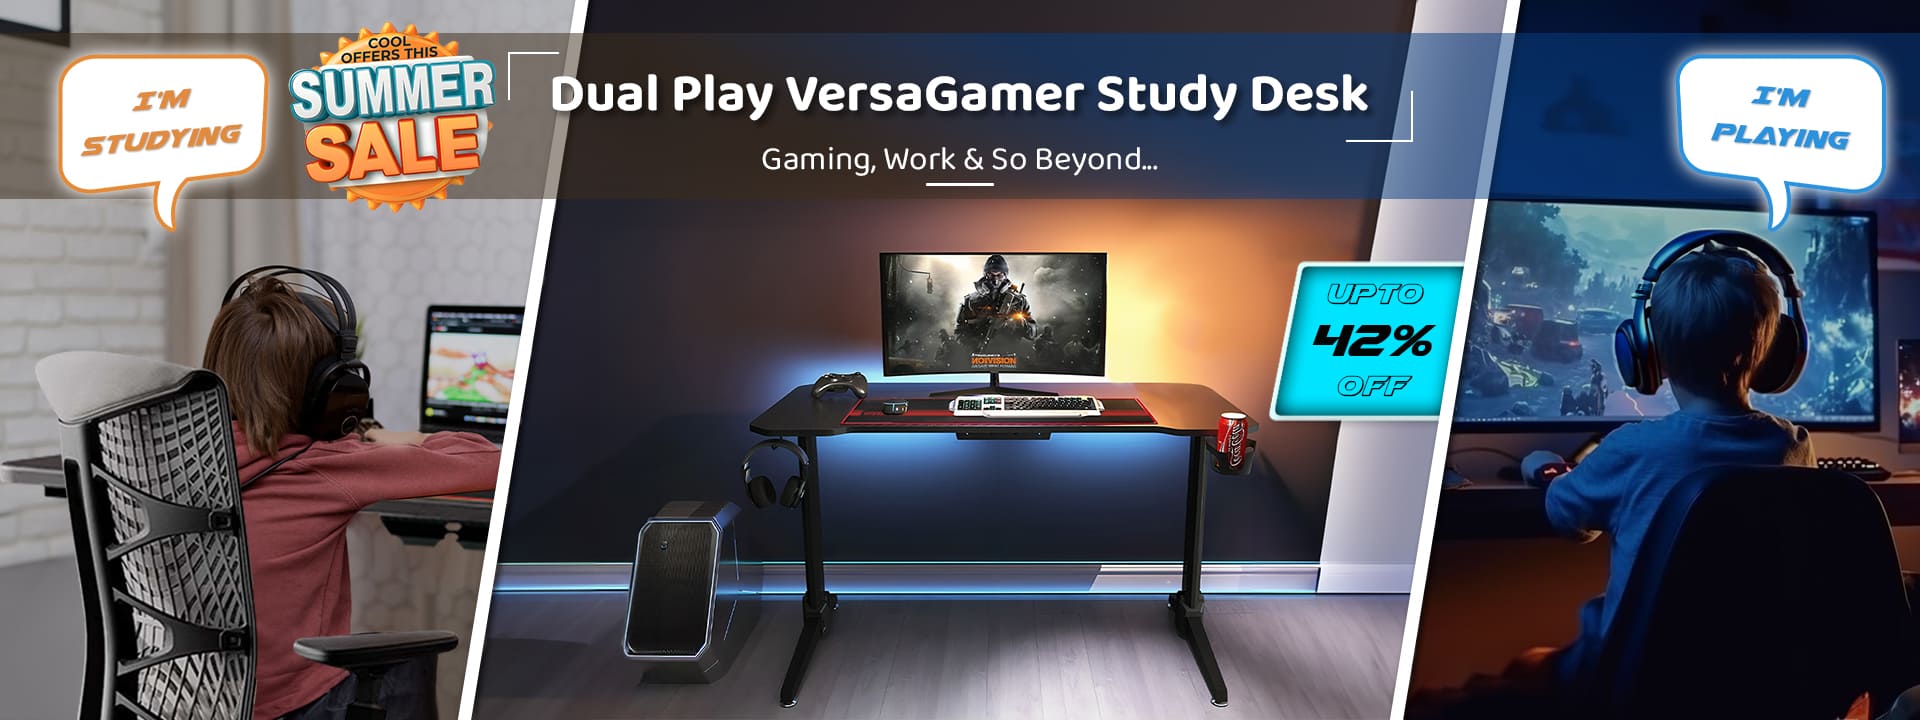 Dualplay versa gamer study desk